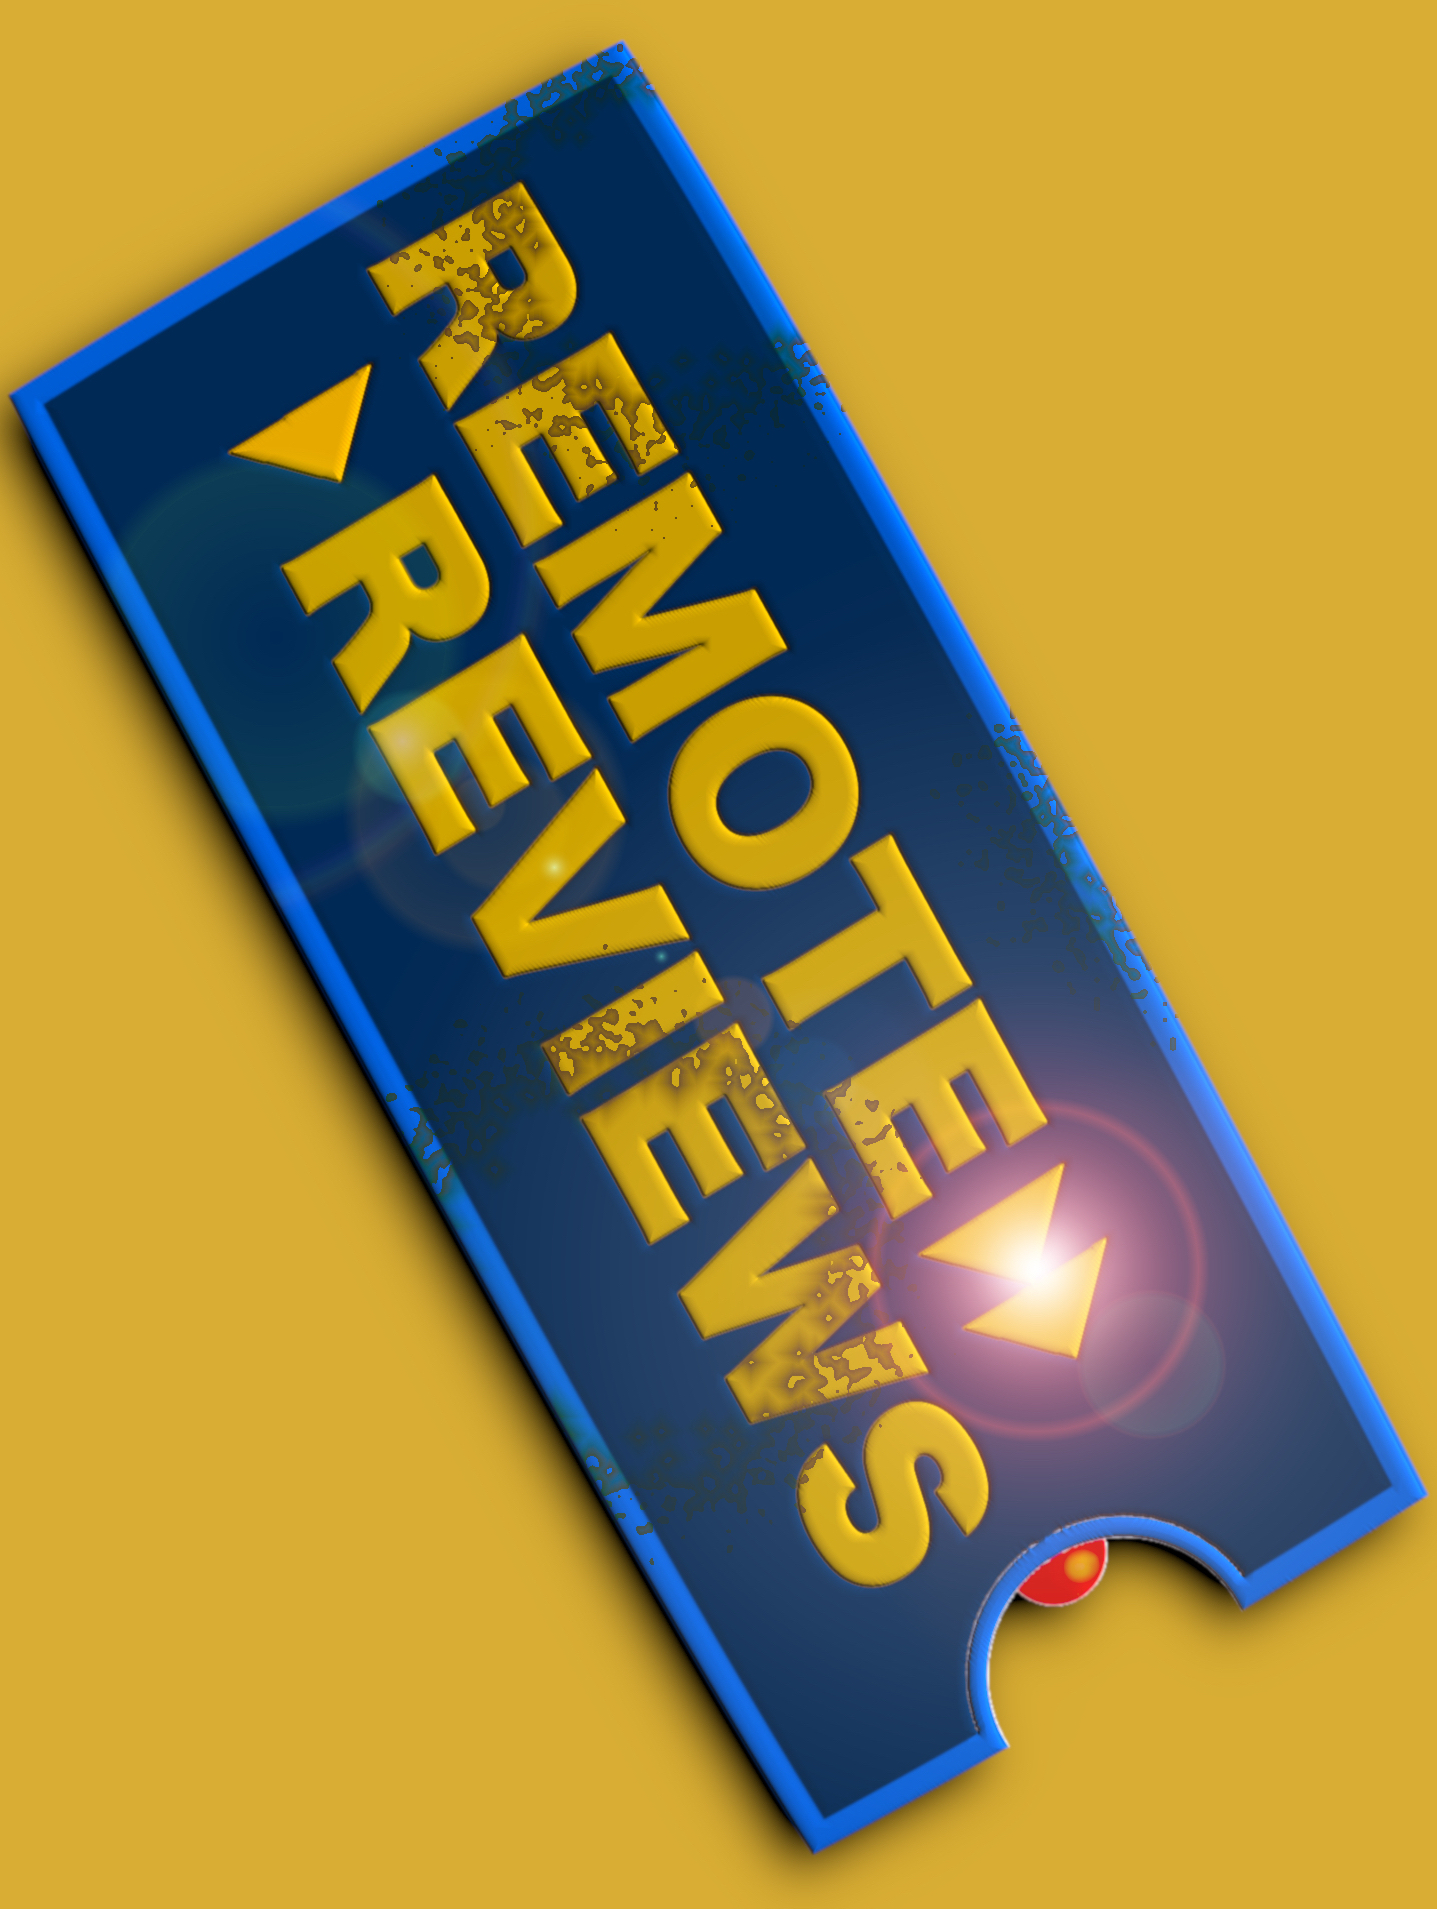 Remote Reviews